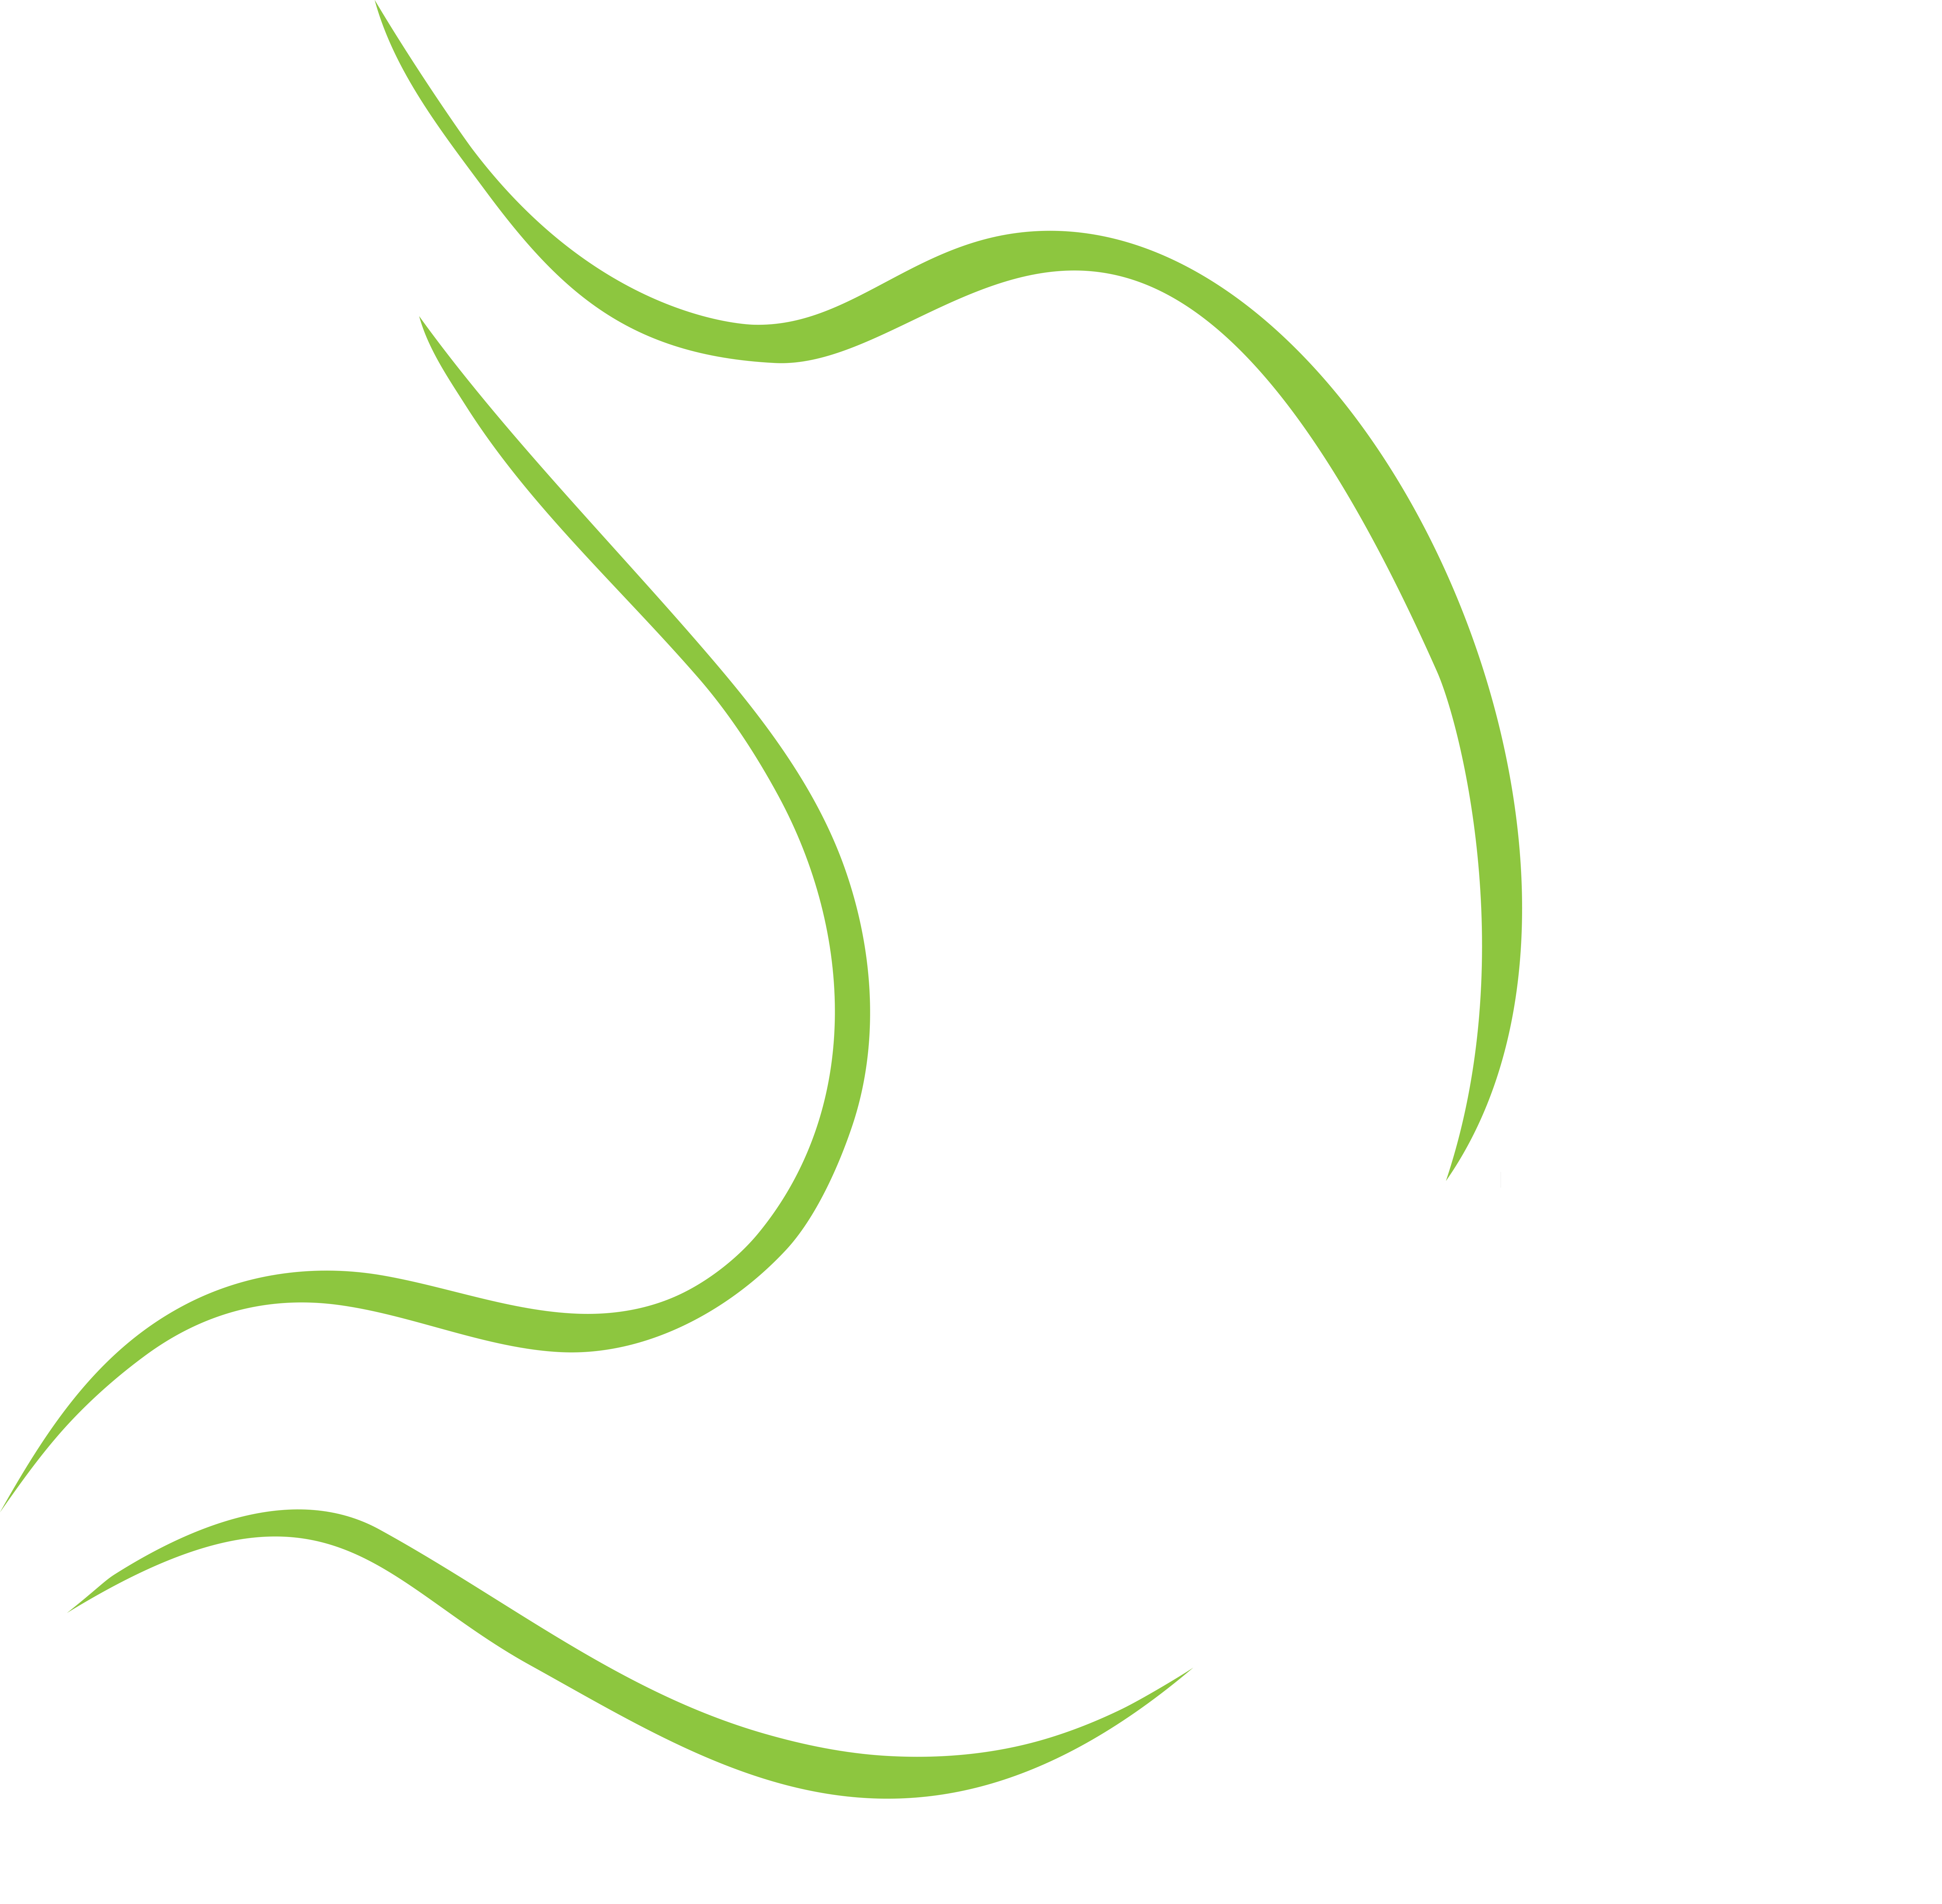 Roger Bongestab